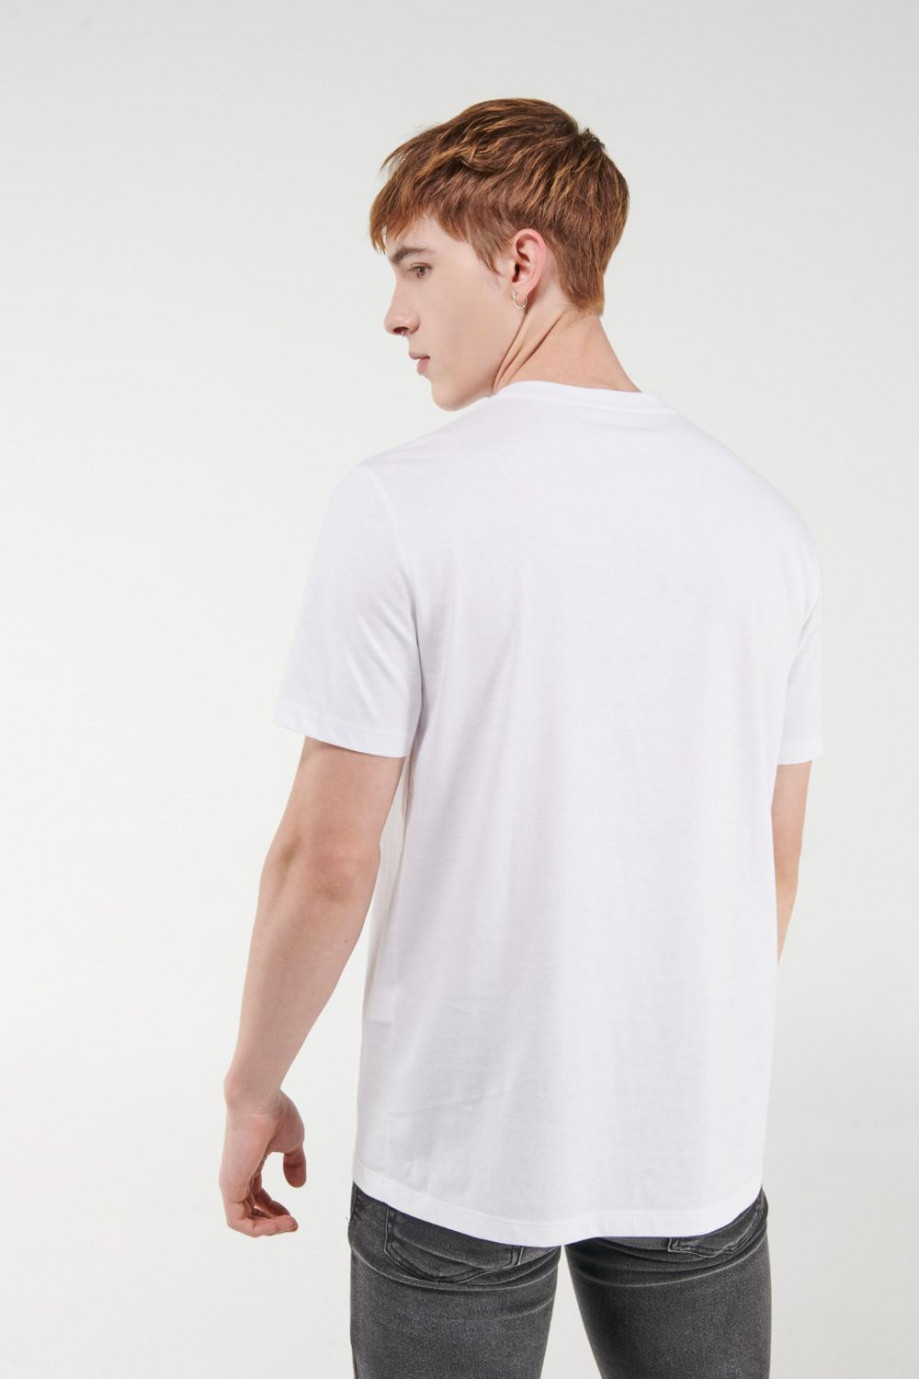 Camiseta blanca manga corta con estampado en frente